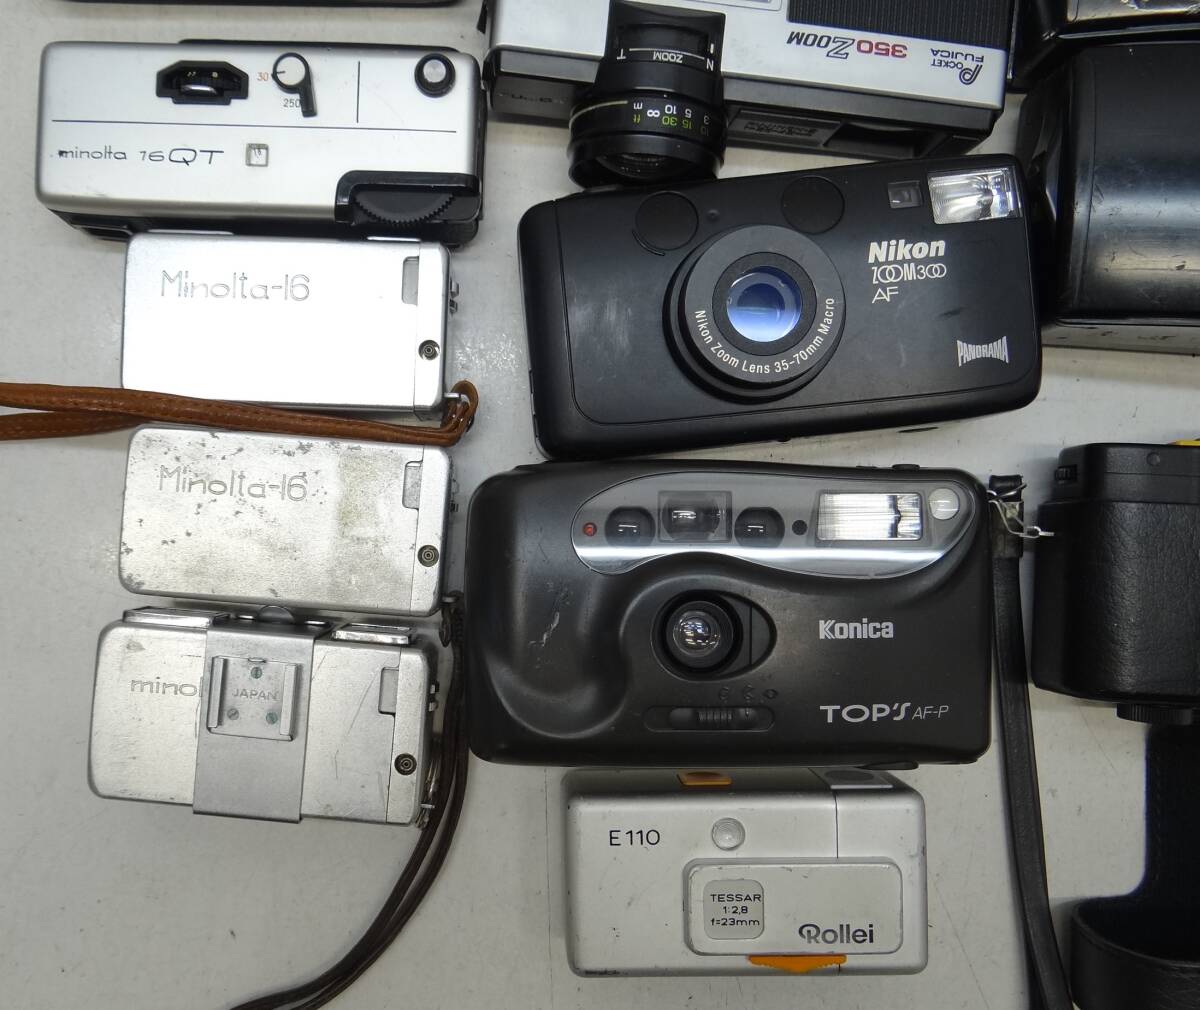 M181D 大量 ３８個 ポケット カメラ HOLGA Minolta PROD-20‘ｓ 16 RolleiE110 Canon DIAL35 コニカ C35 現場監督 START35 等 ジャンク_画像6